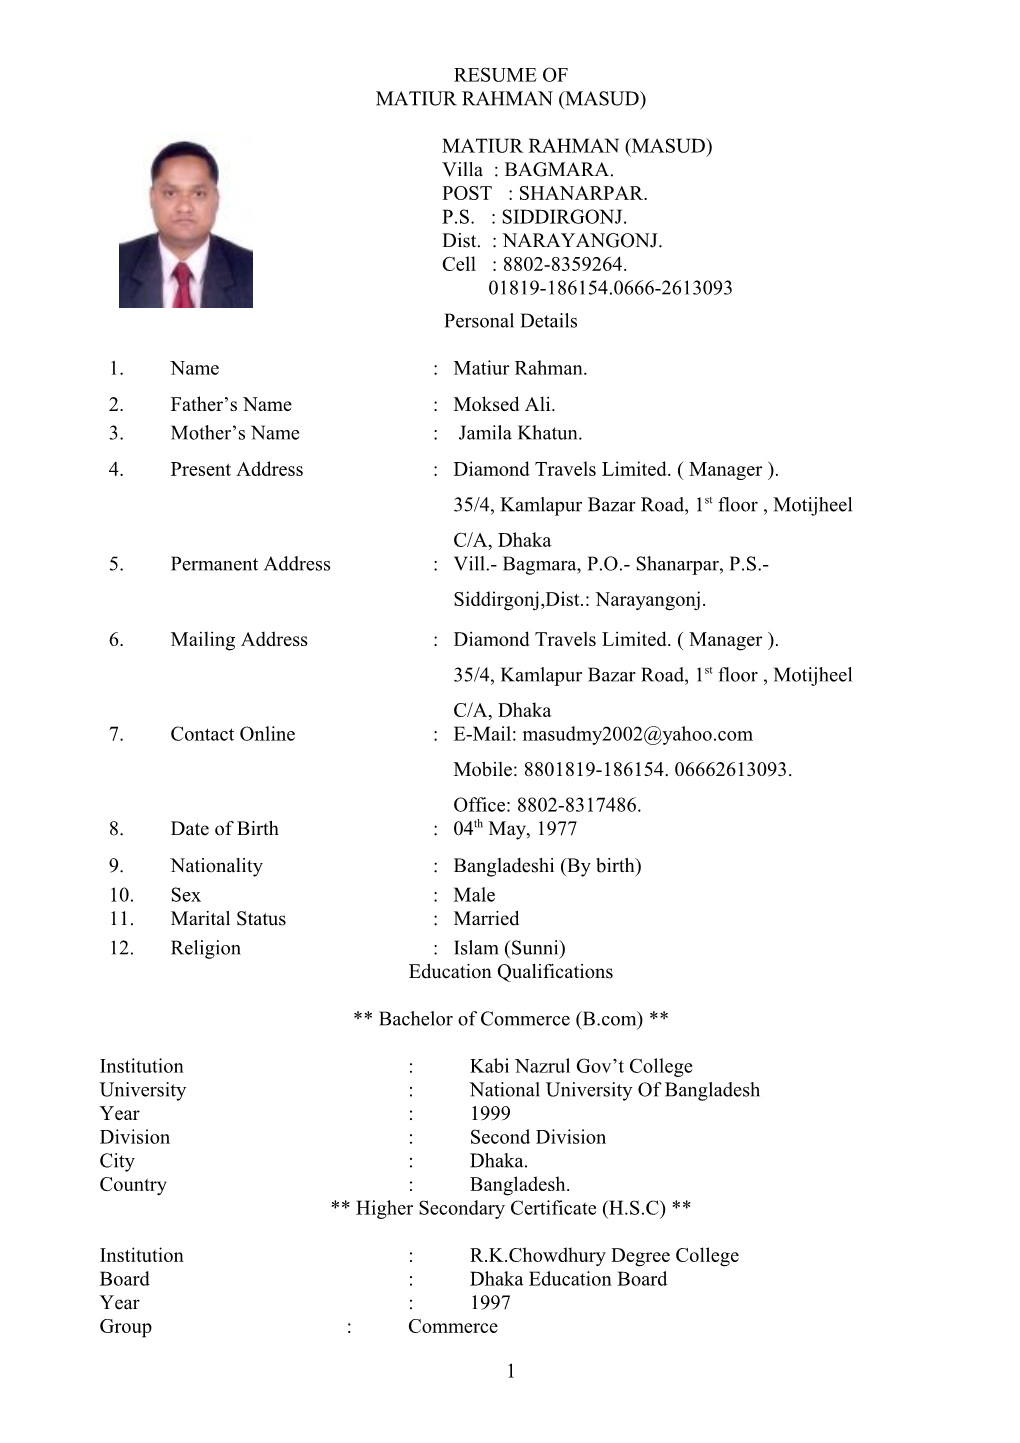 Resume of Matiur Rahman (Masud)